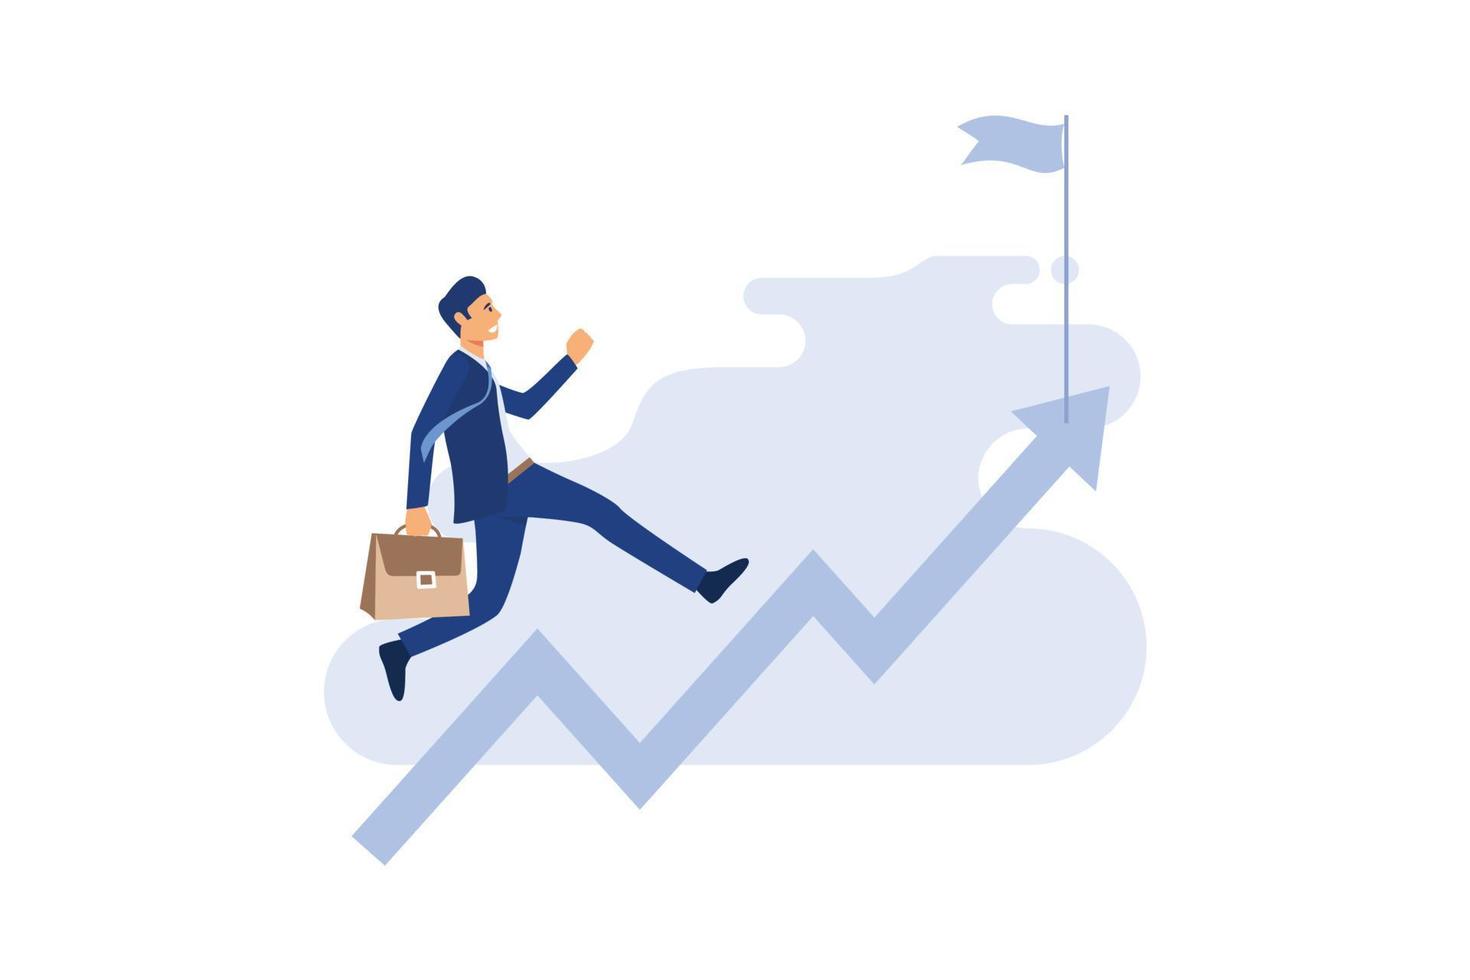 Running towards the goal. Business vector illustration